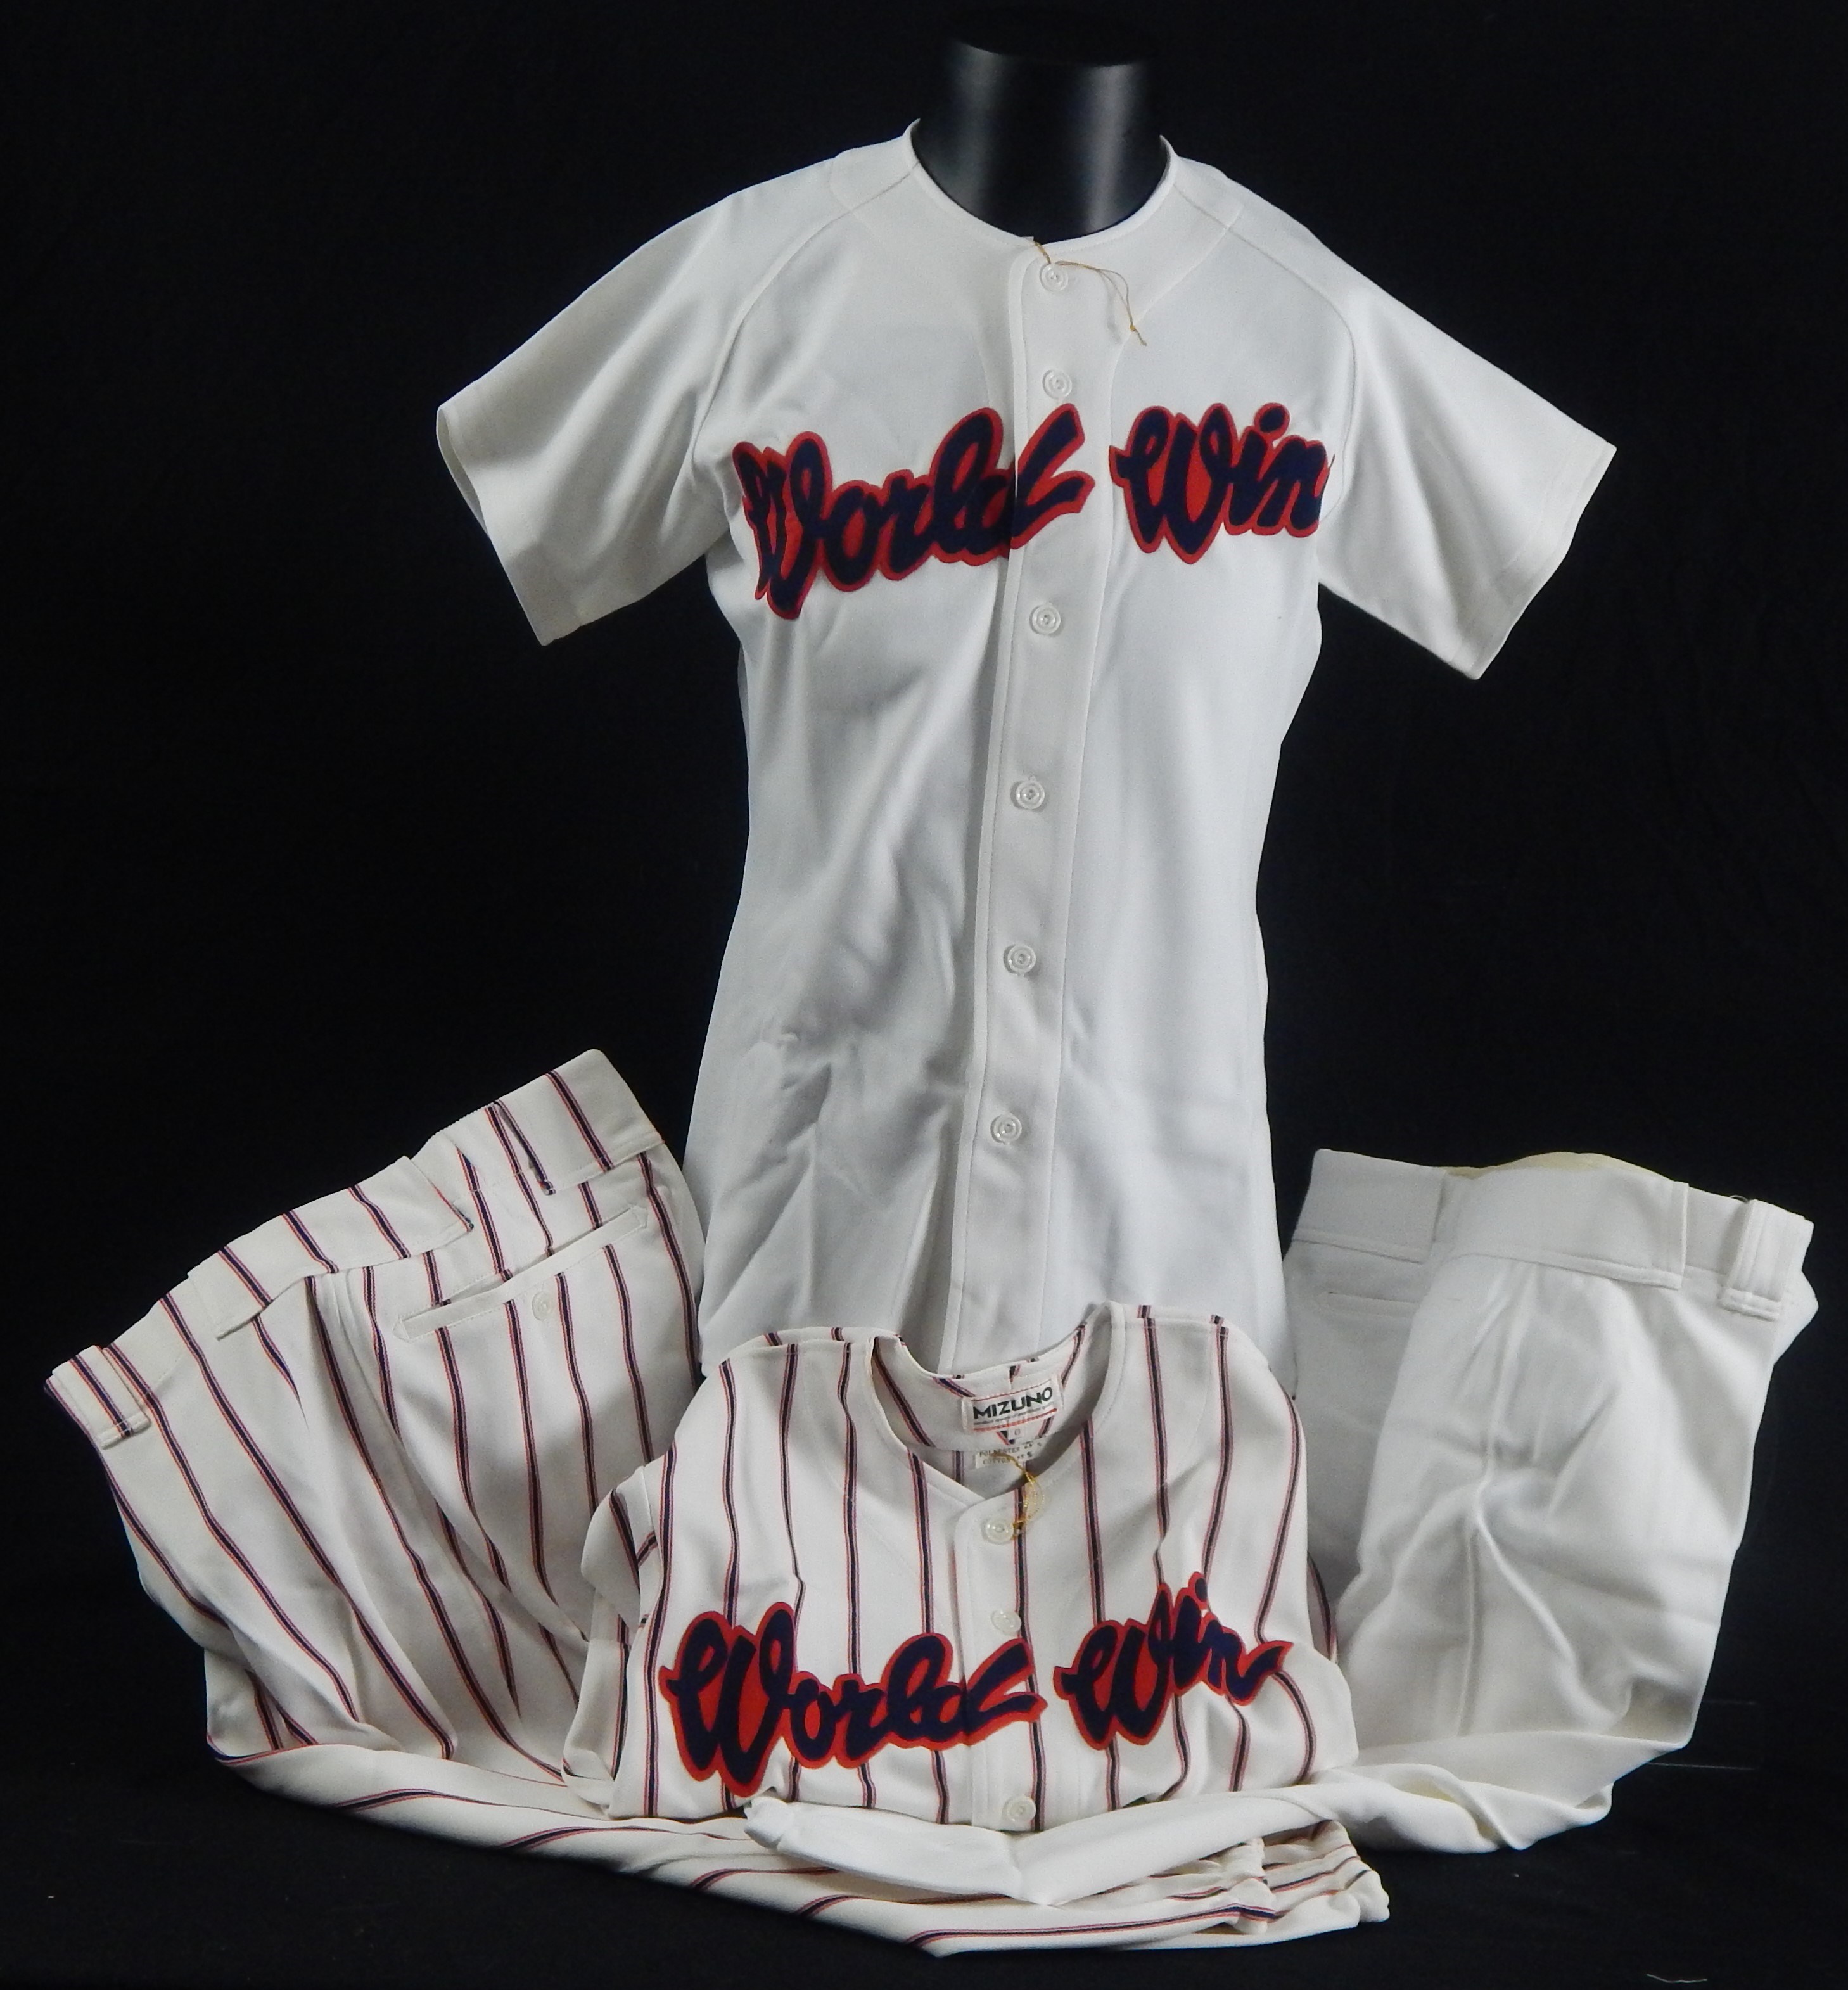 - 1970's Mizuno World Win Salesman's Sample Uniforms (2)